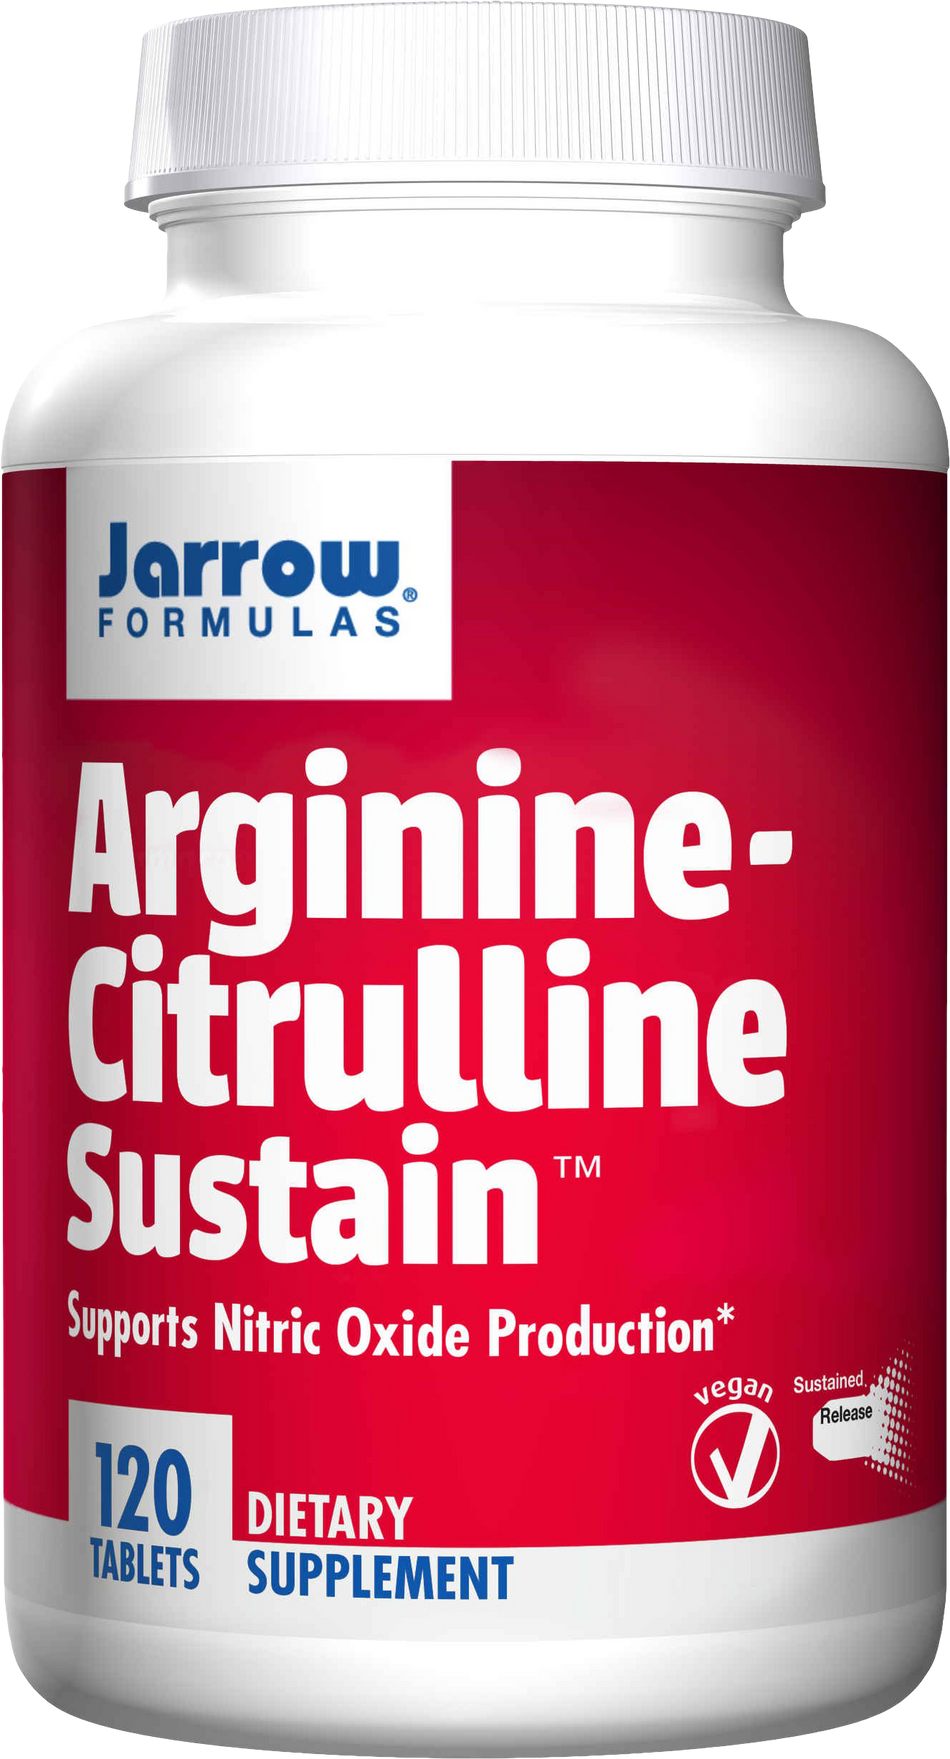 Arginine-Citrulline Sustain - BadiZdrav.BG